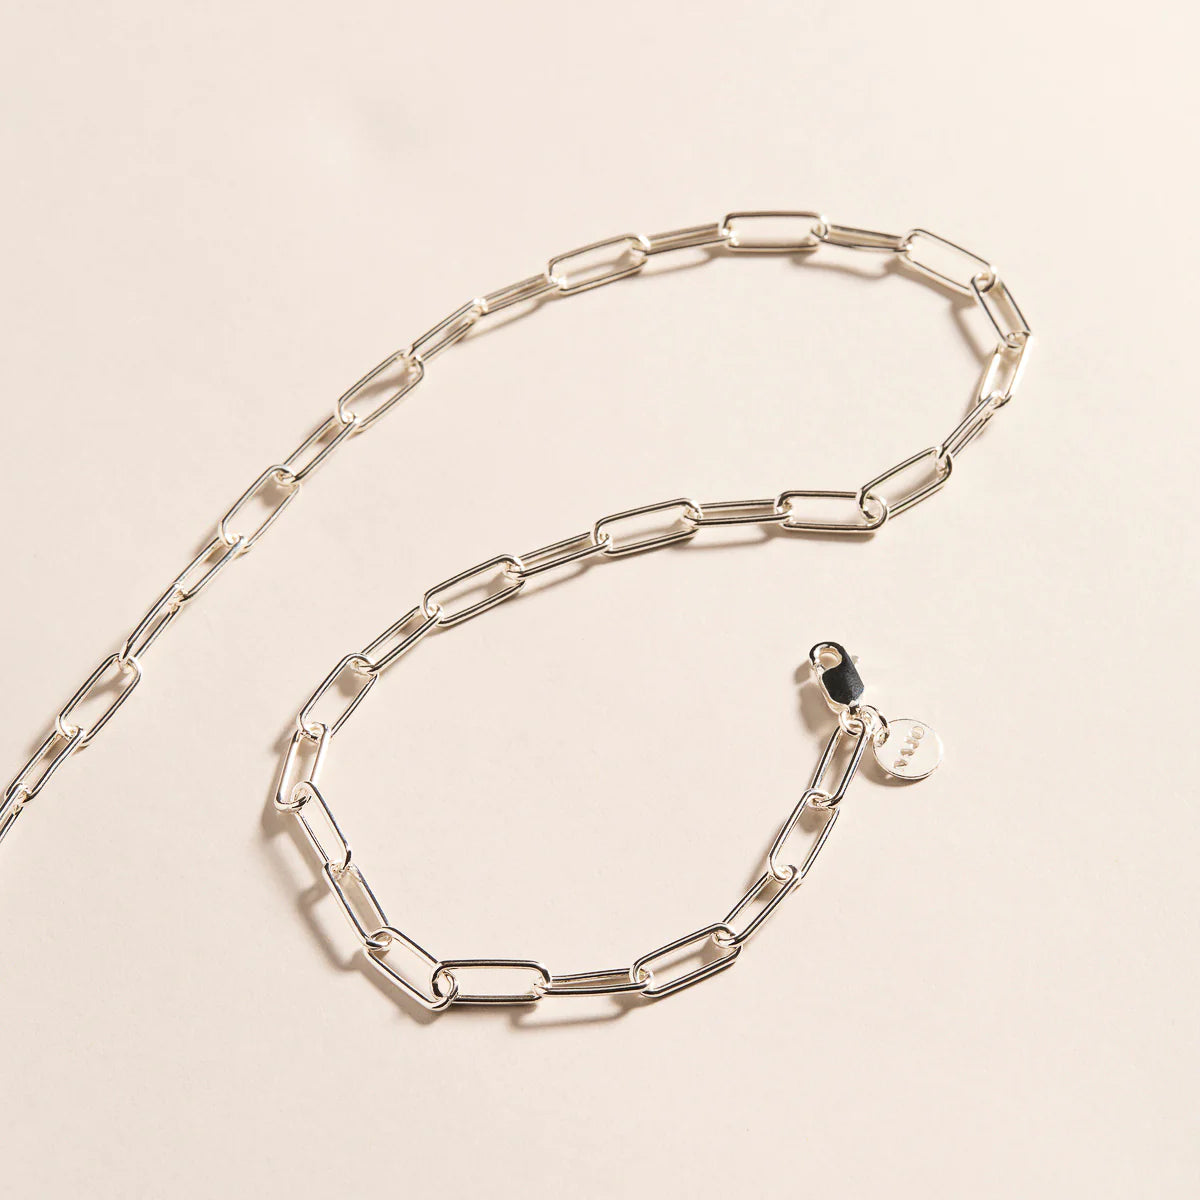 Vista Chain Necklace - goldtone